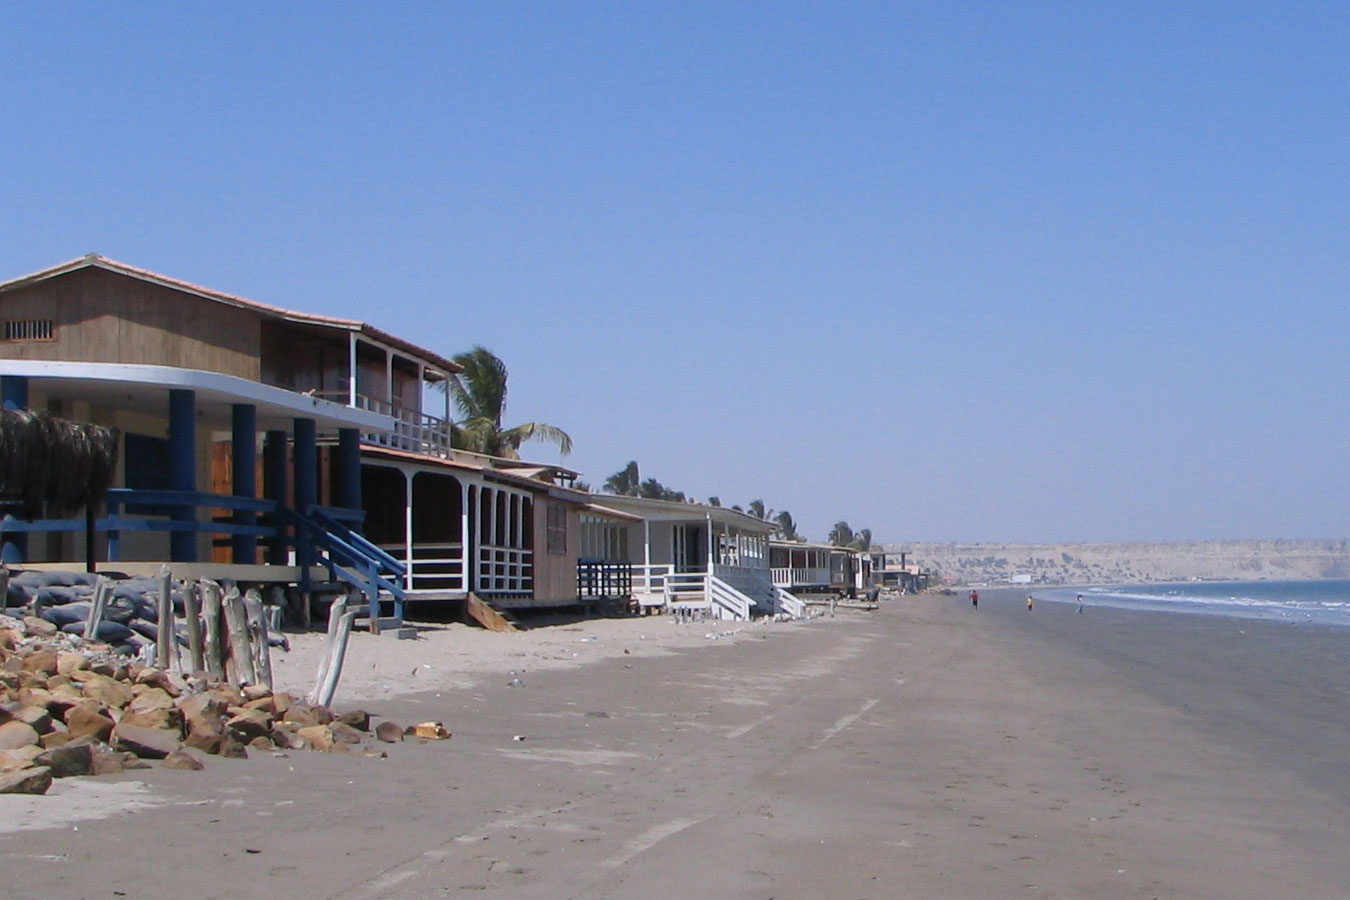 Alquiler de casas de playa aumentó 40% este verano